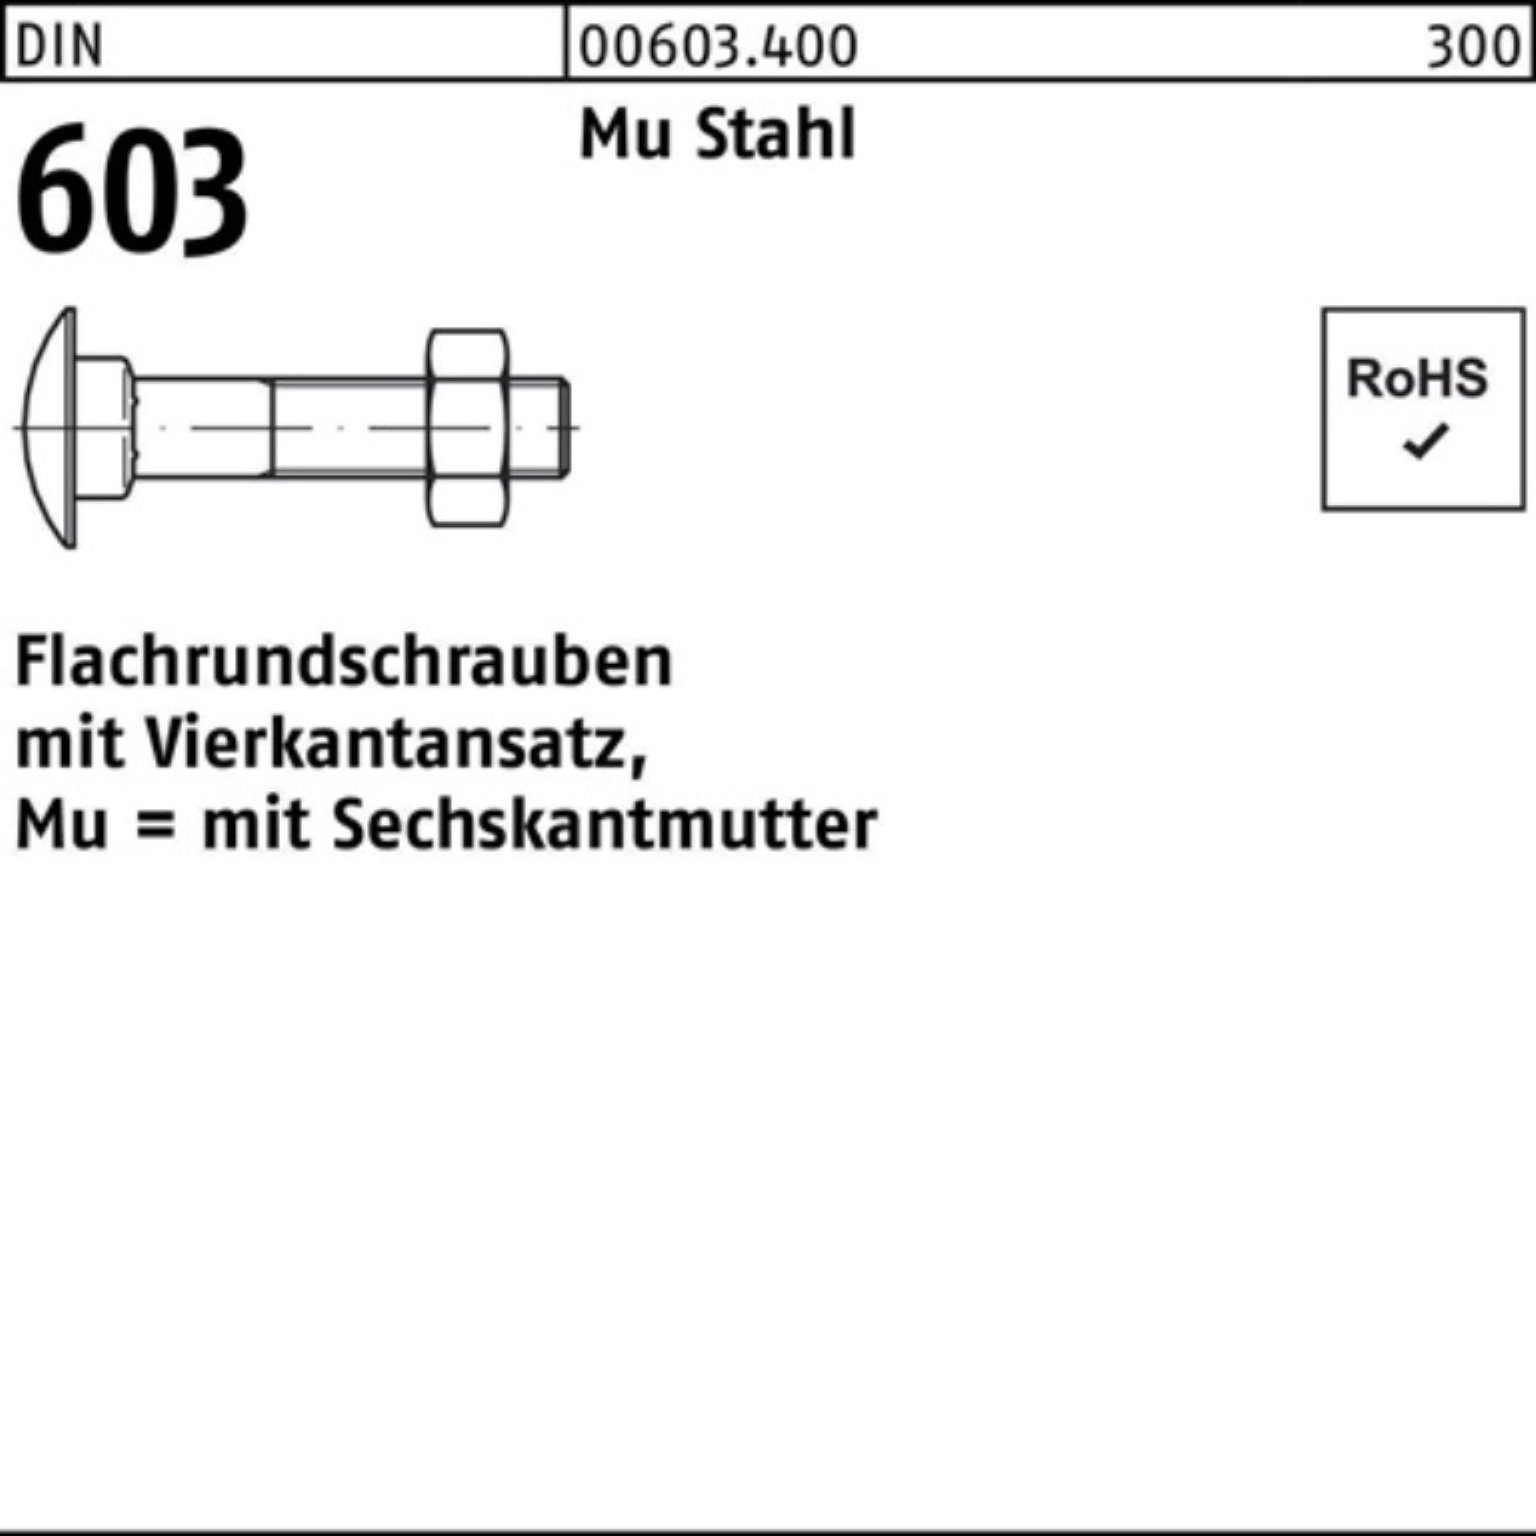 Reyher Schraube 200er Pack Flachrundschraube M DIN M6x35 Vierkantansatz/6-ktmutter 603